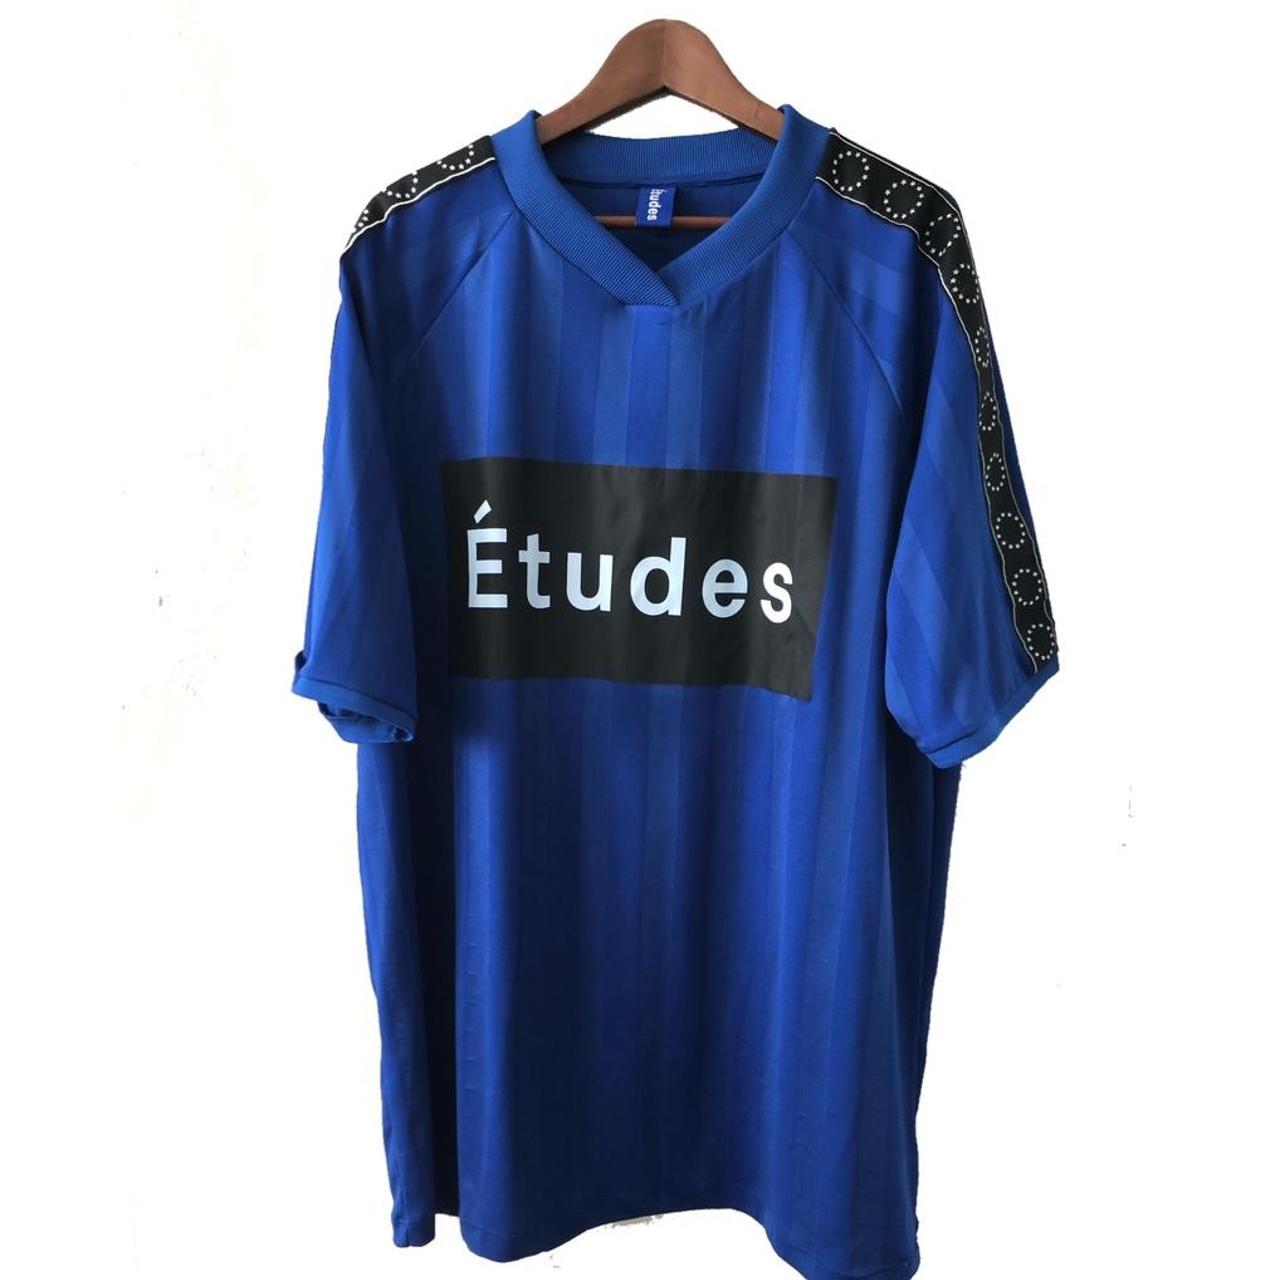 Product Image 1 - Études short sleeve sports jersey